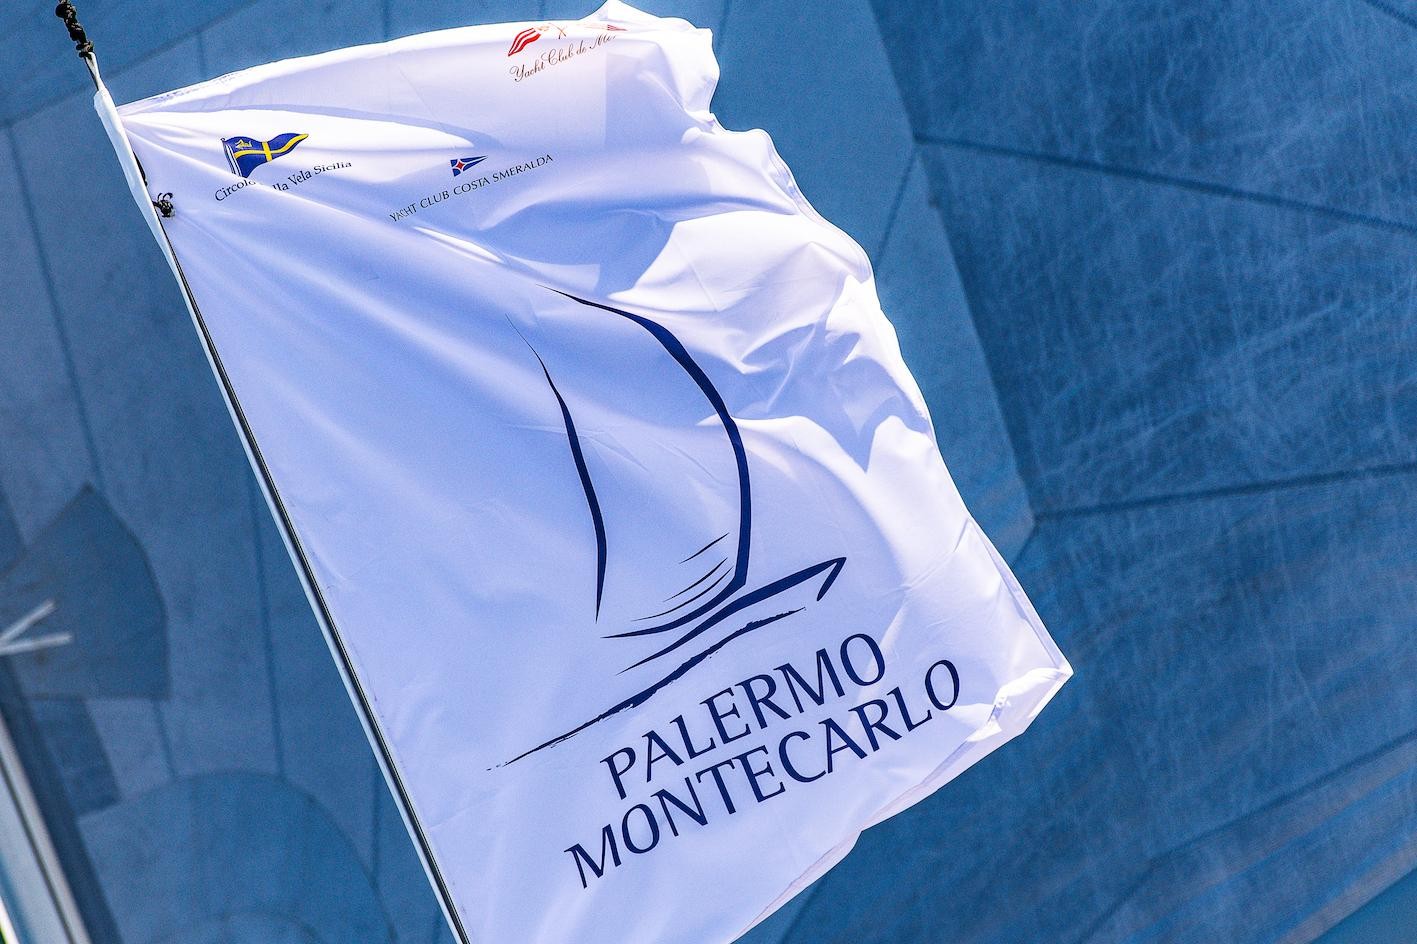 Palermo-Montecarlo 2019